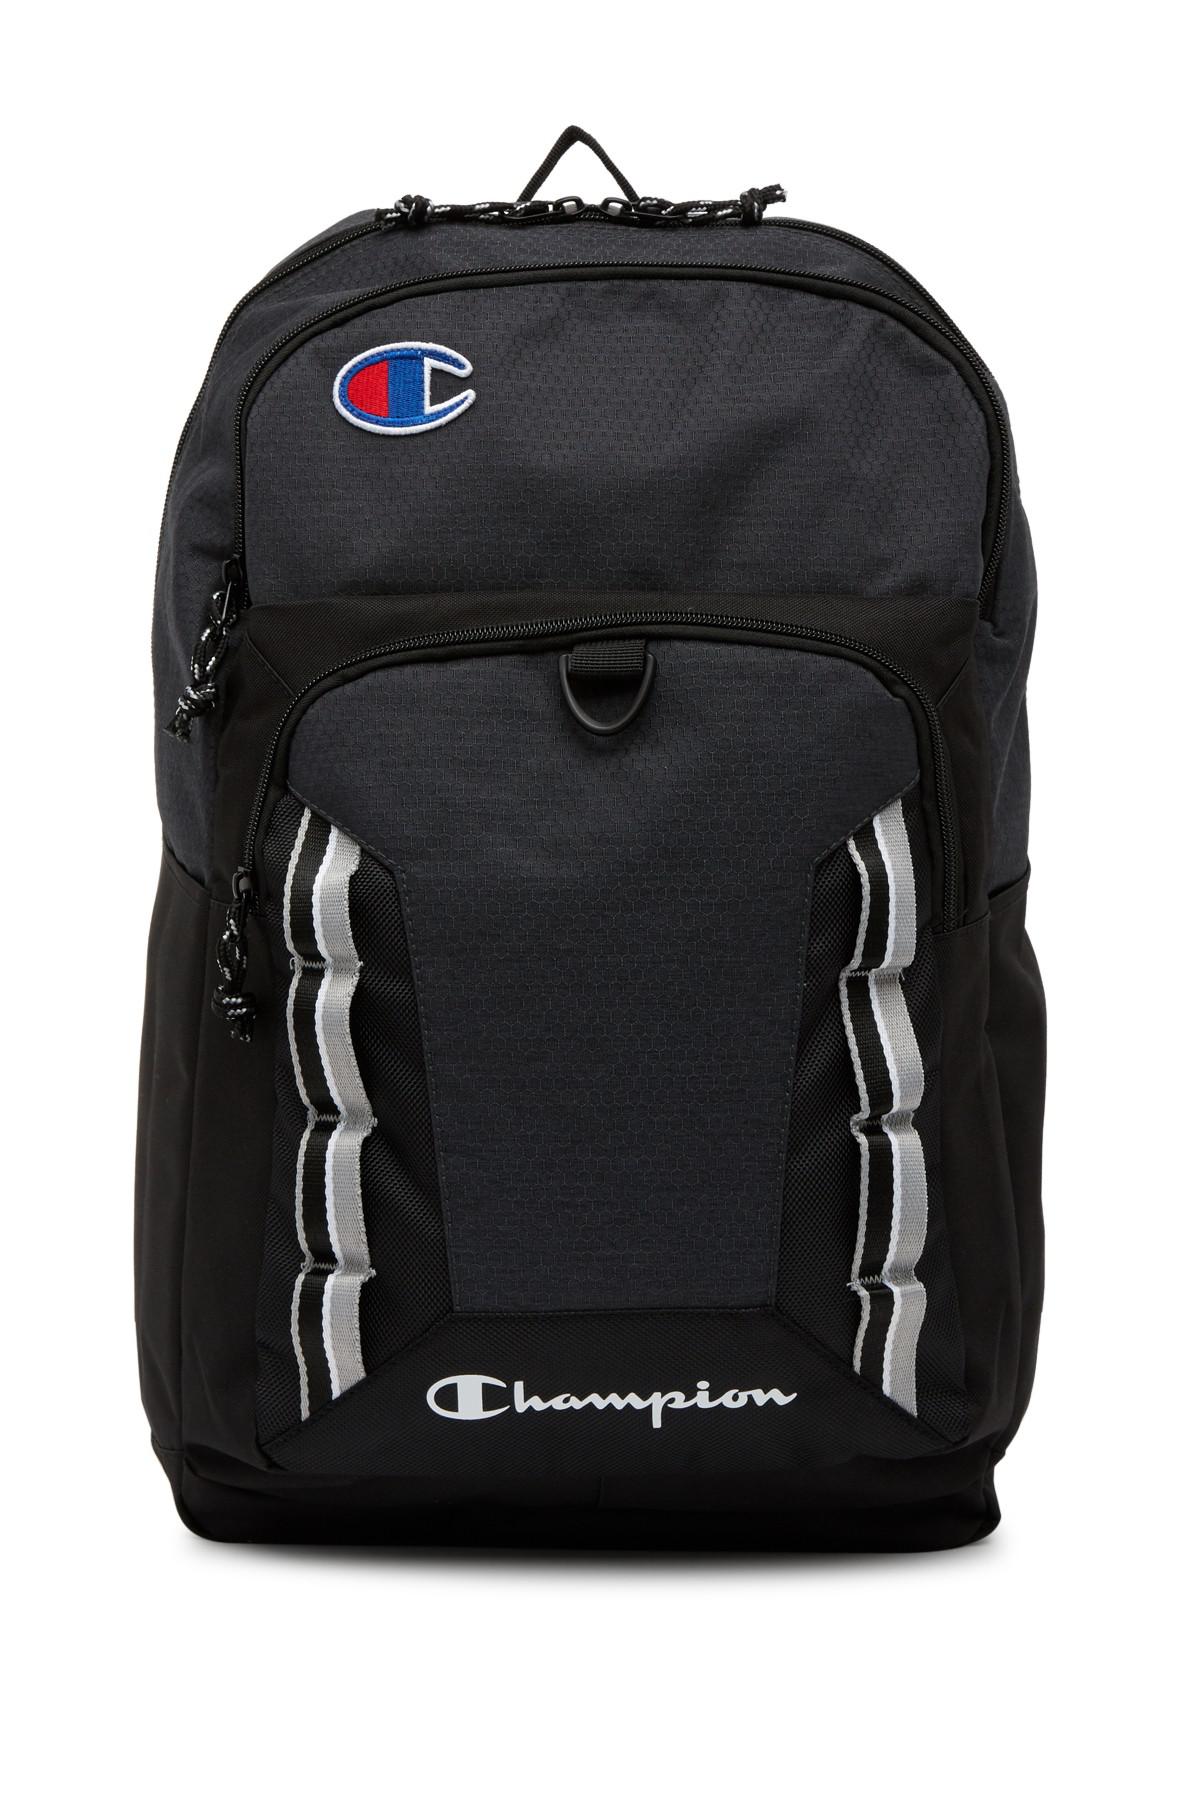 burgundy champion backpack